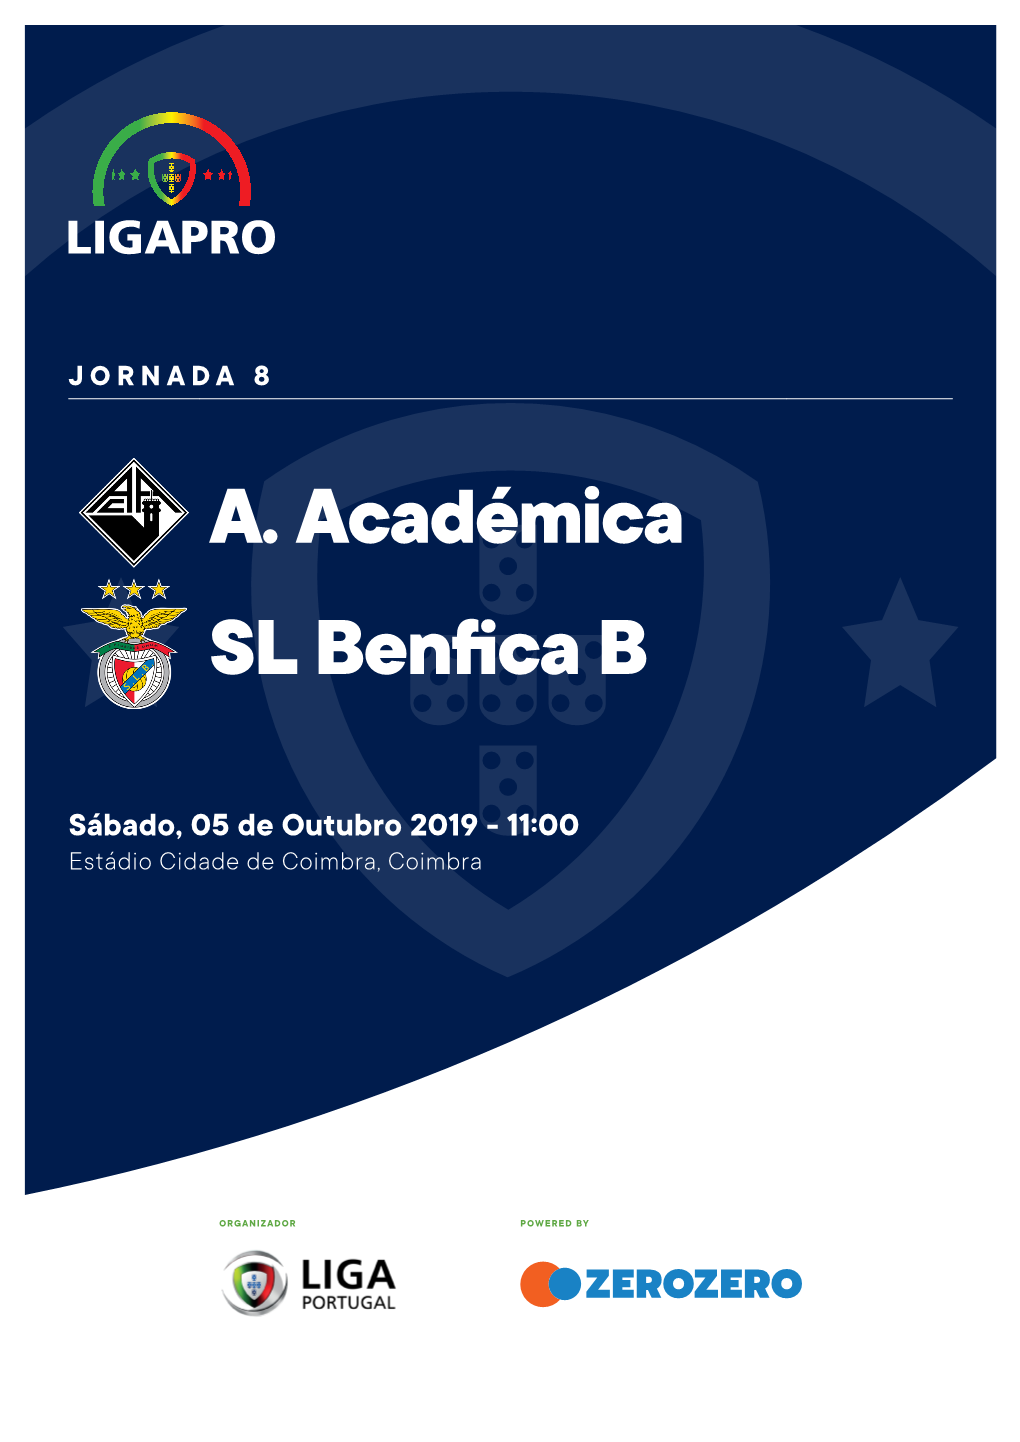 A. Académica SL Benfica B